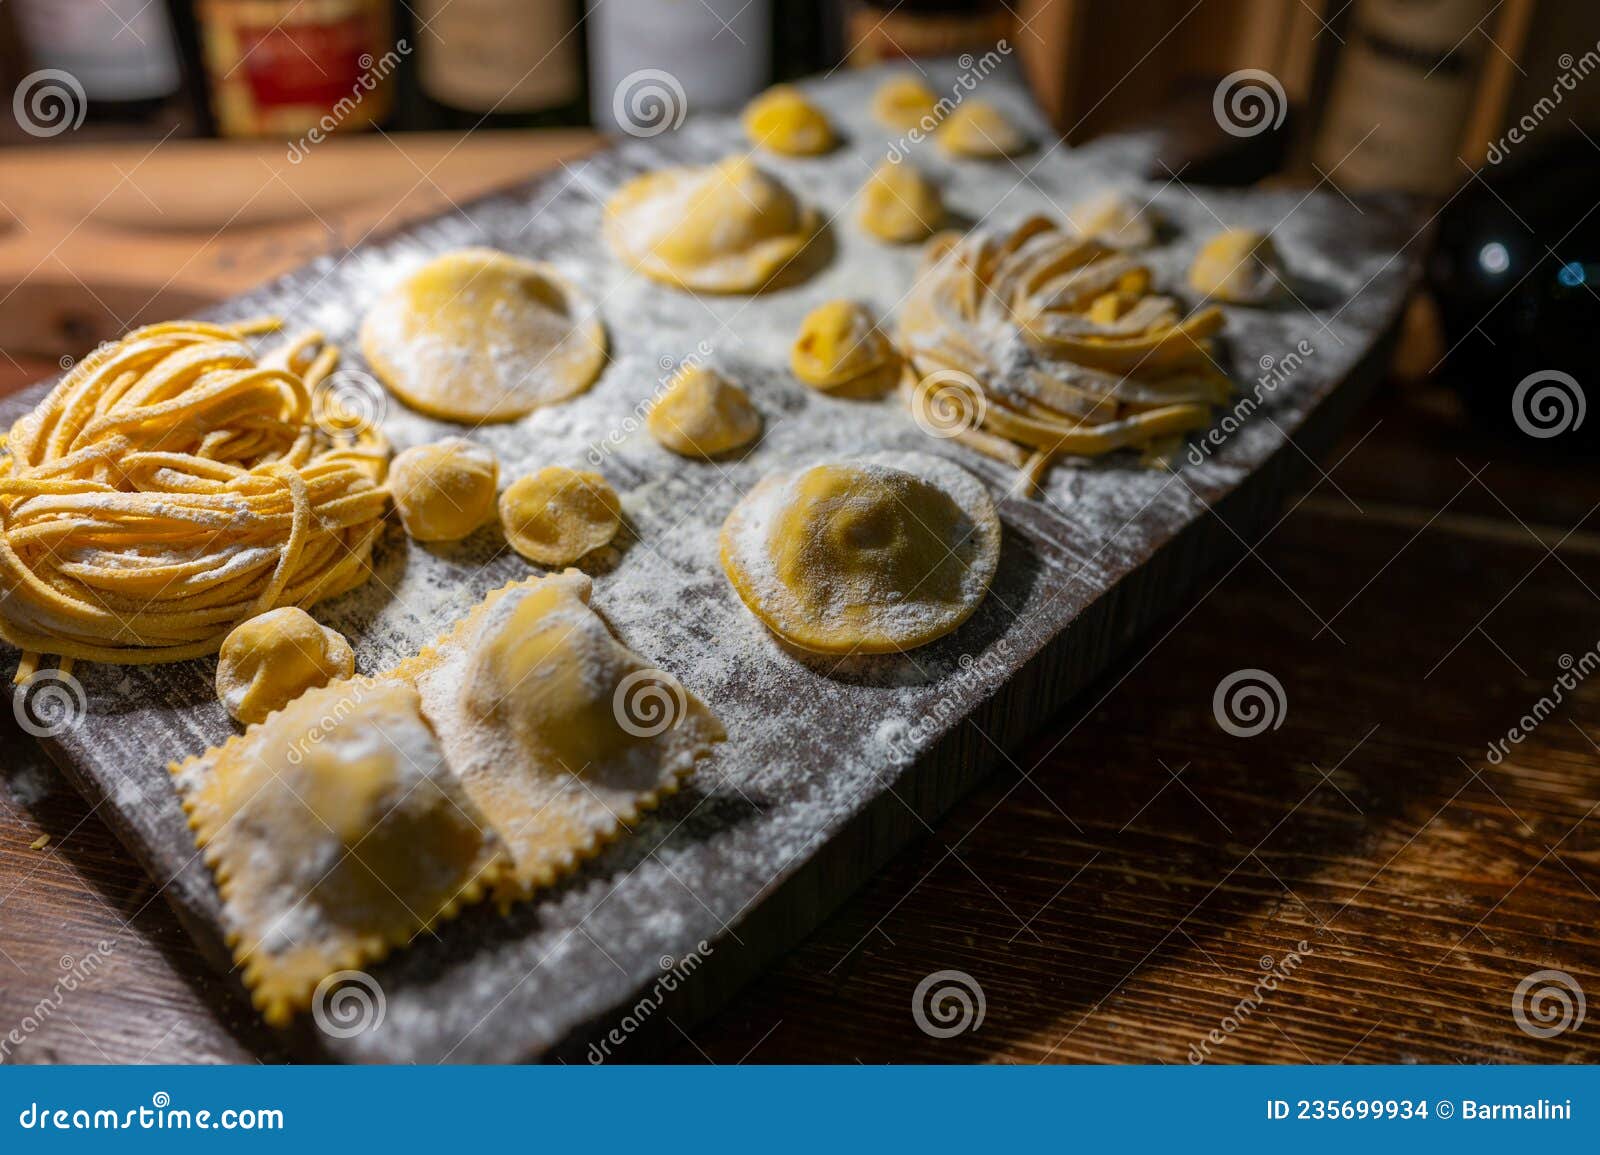 italian food, fresh home made stuffed pasta tortelli or ravioli dumplings ready to cook, parma, emilia romagna, italy